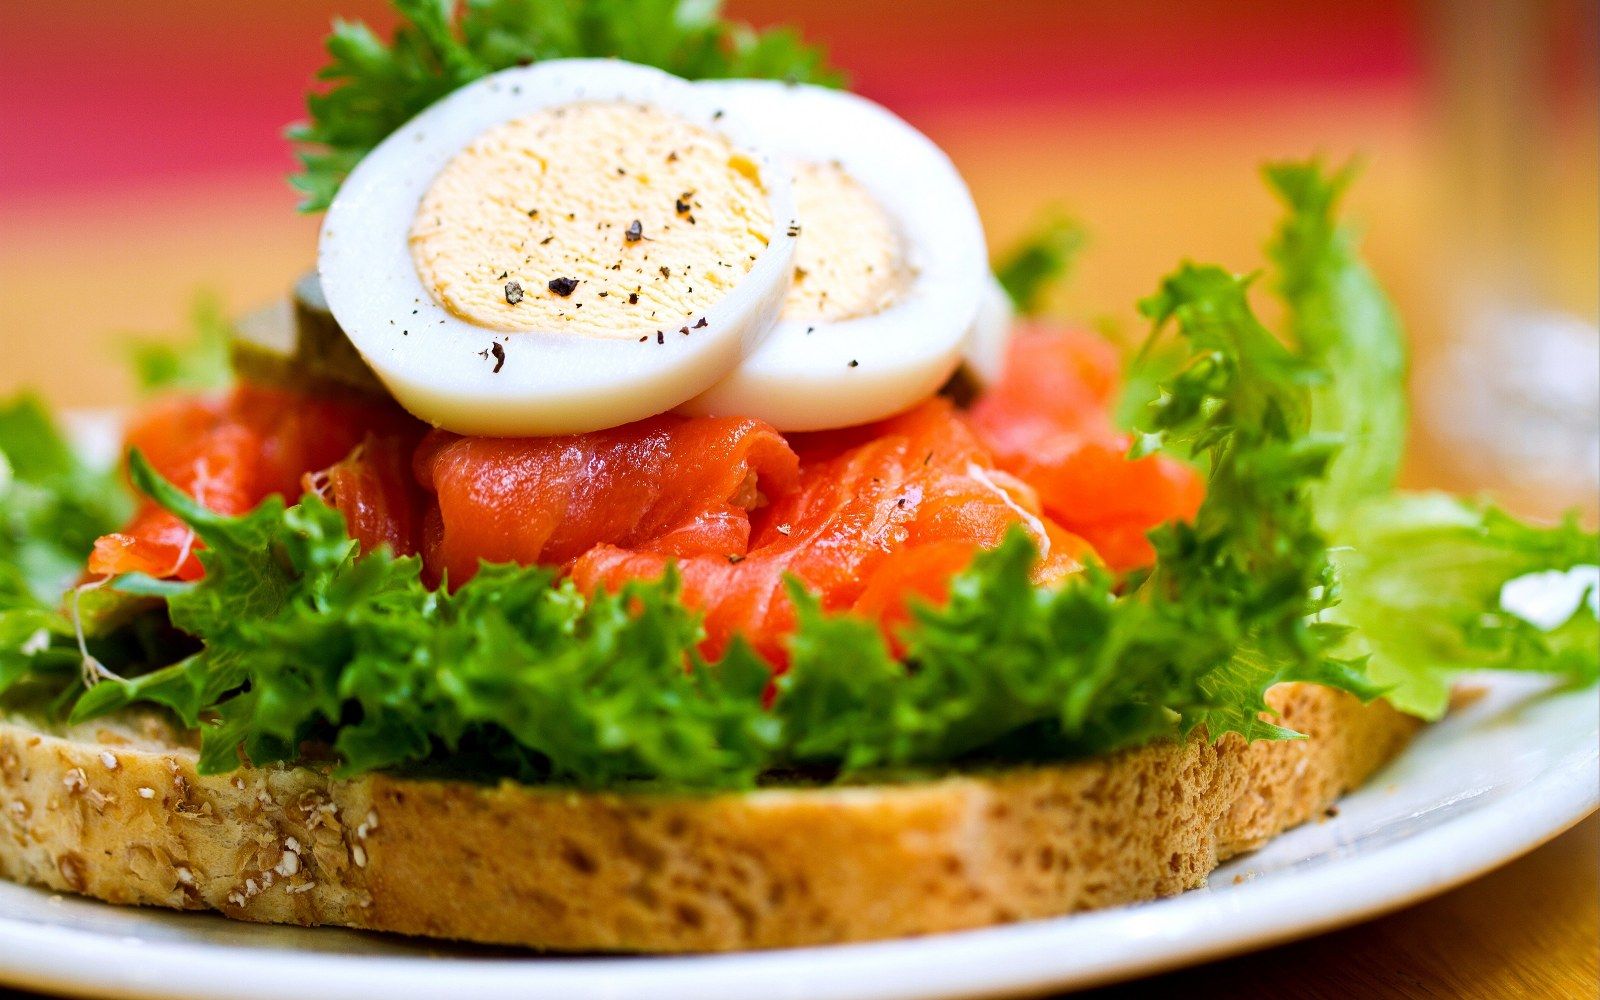 Free download Breakfast Menu Healthy Food wallpaper55com Best